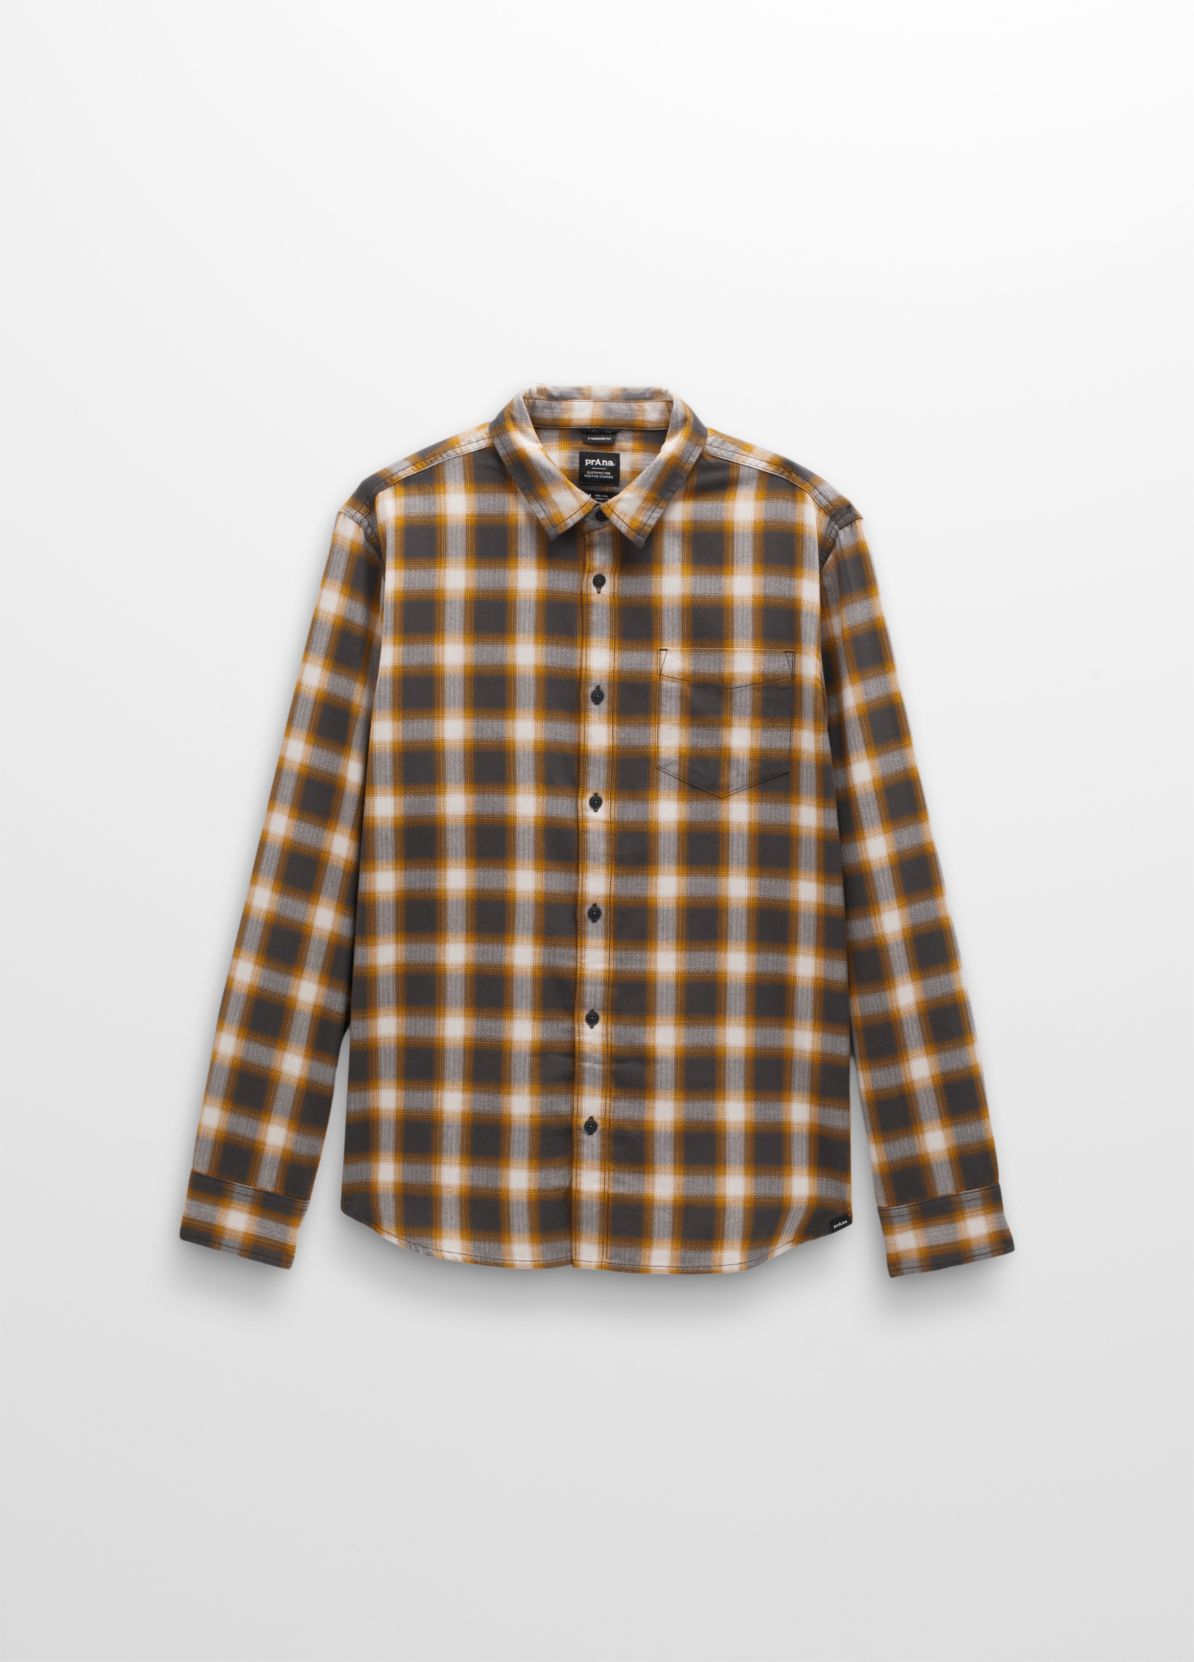 Prana - Los Feliz Flannel Shirt